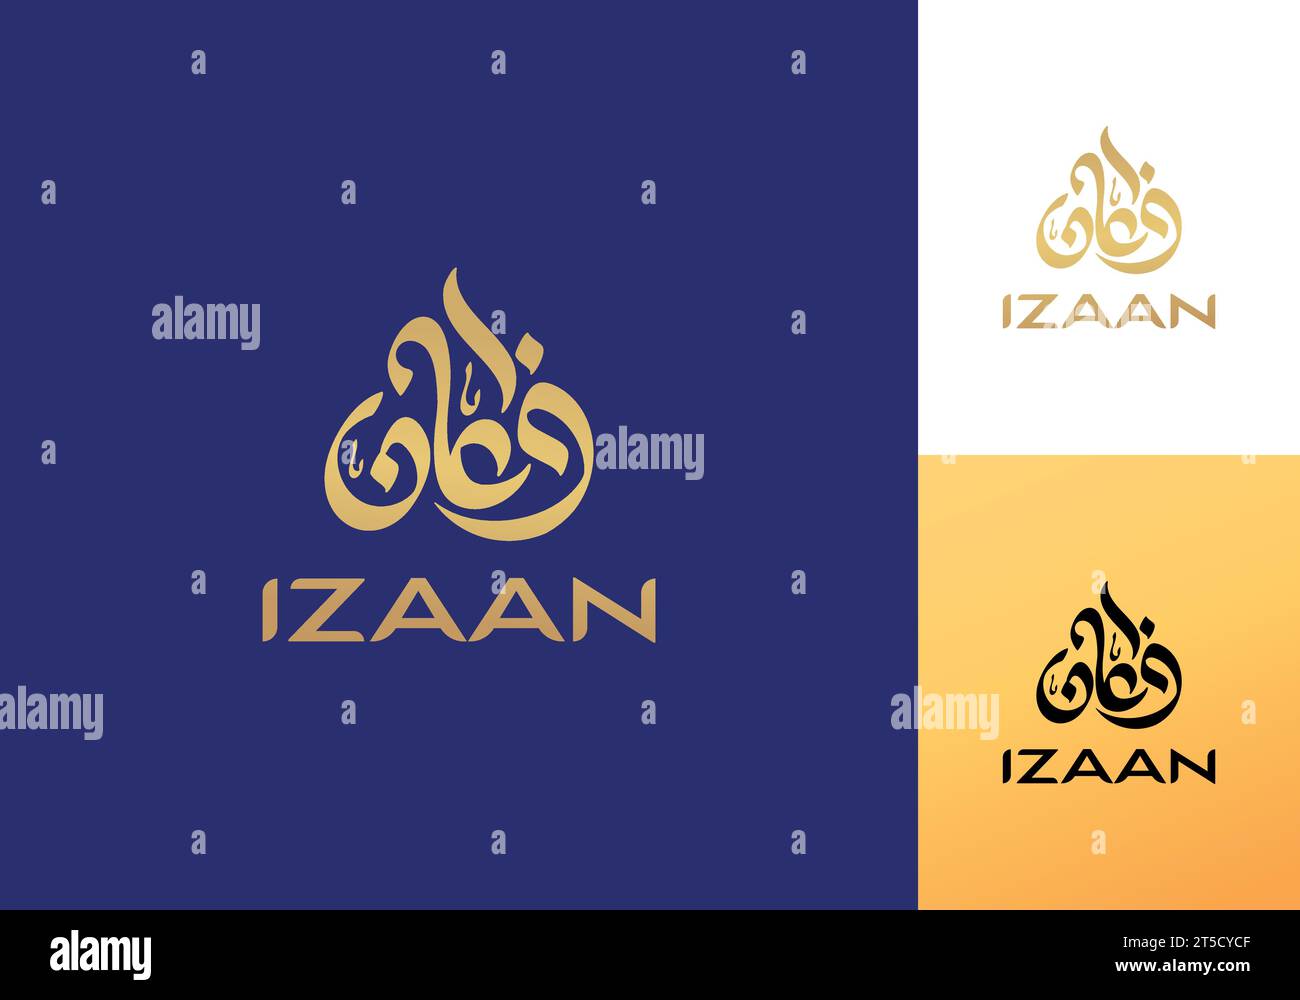 Izaan (اذعان) Arabic Logo design. It is minimalist, modern